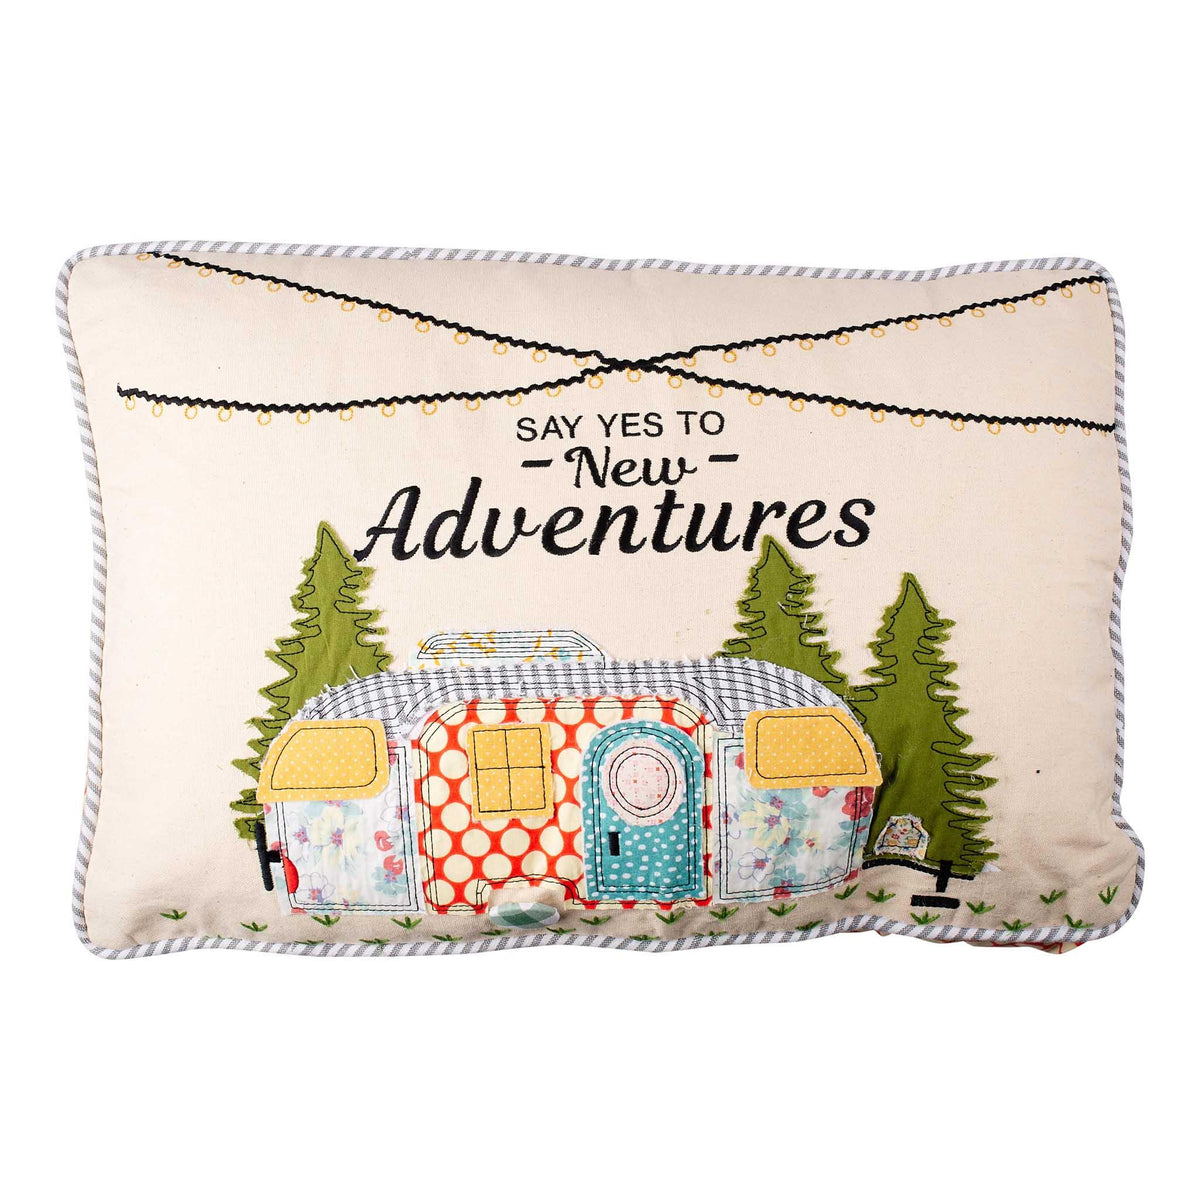 Adventures Camper Pillow - GLORY HAUS 